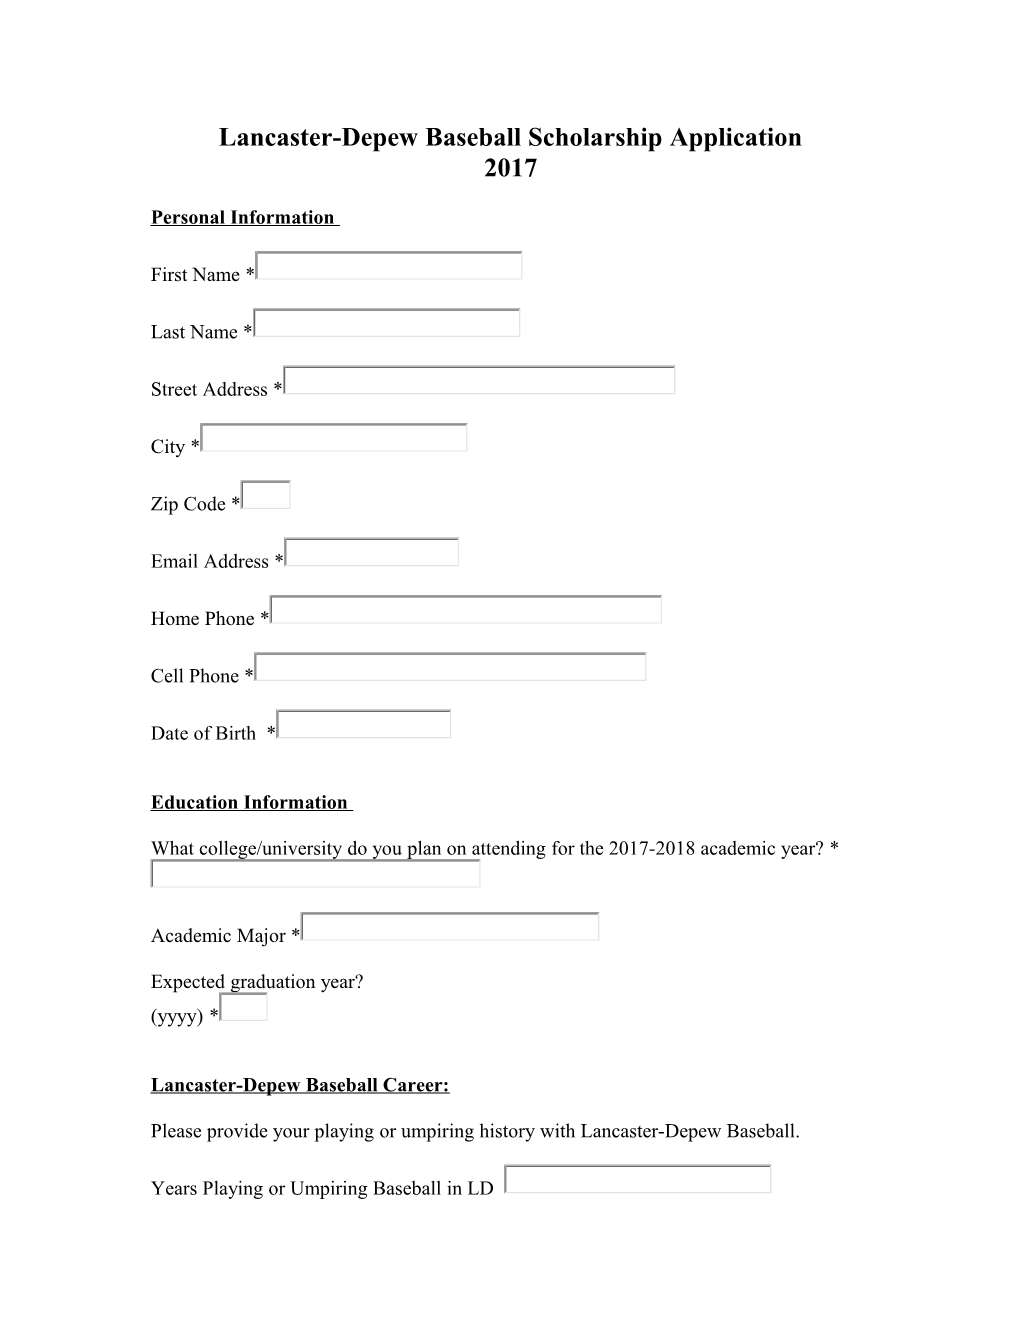 Lancaster-Depew Baseball Scholarshipapplication